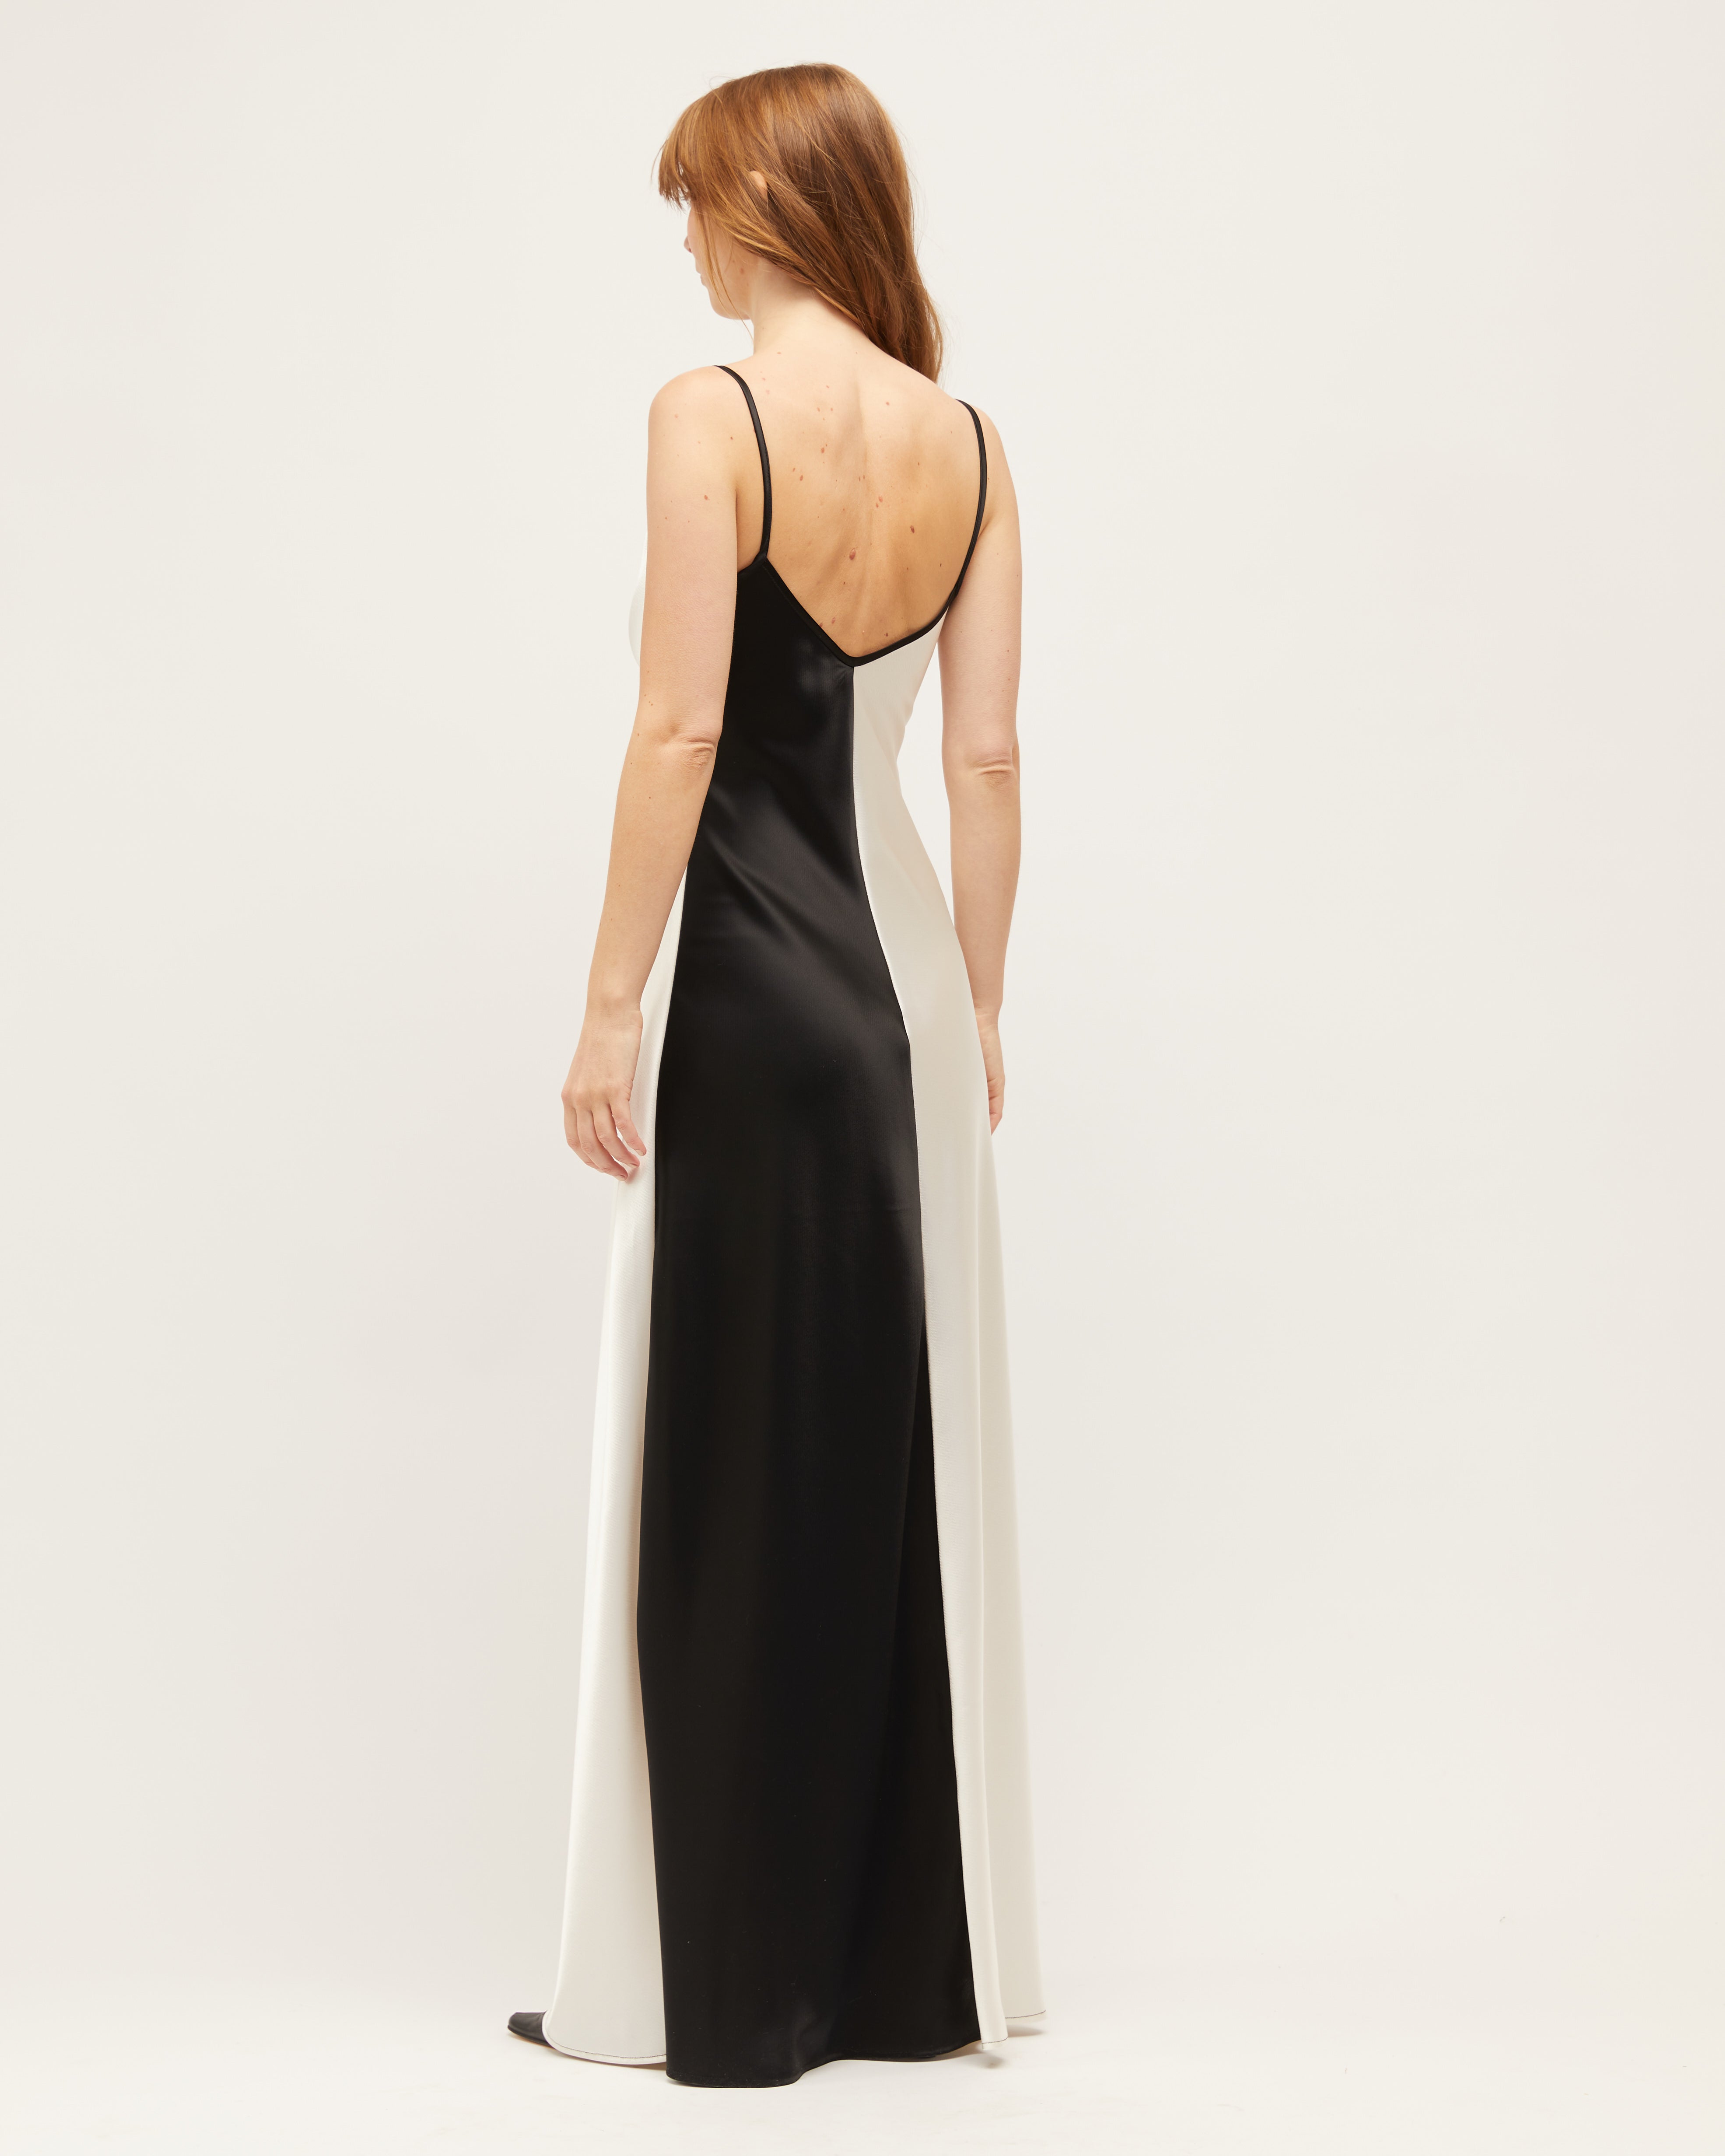 Sloane Dress | Black Oyster $490